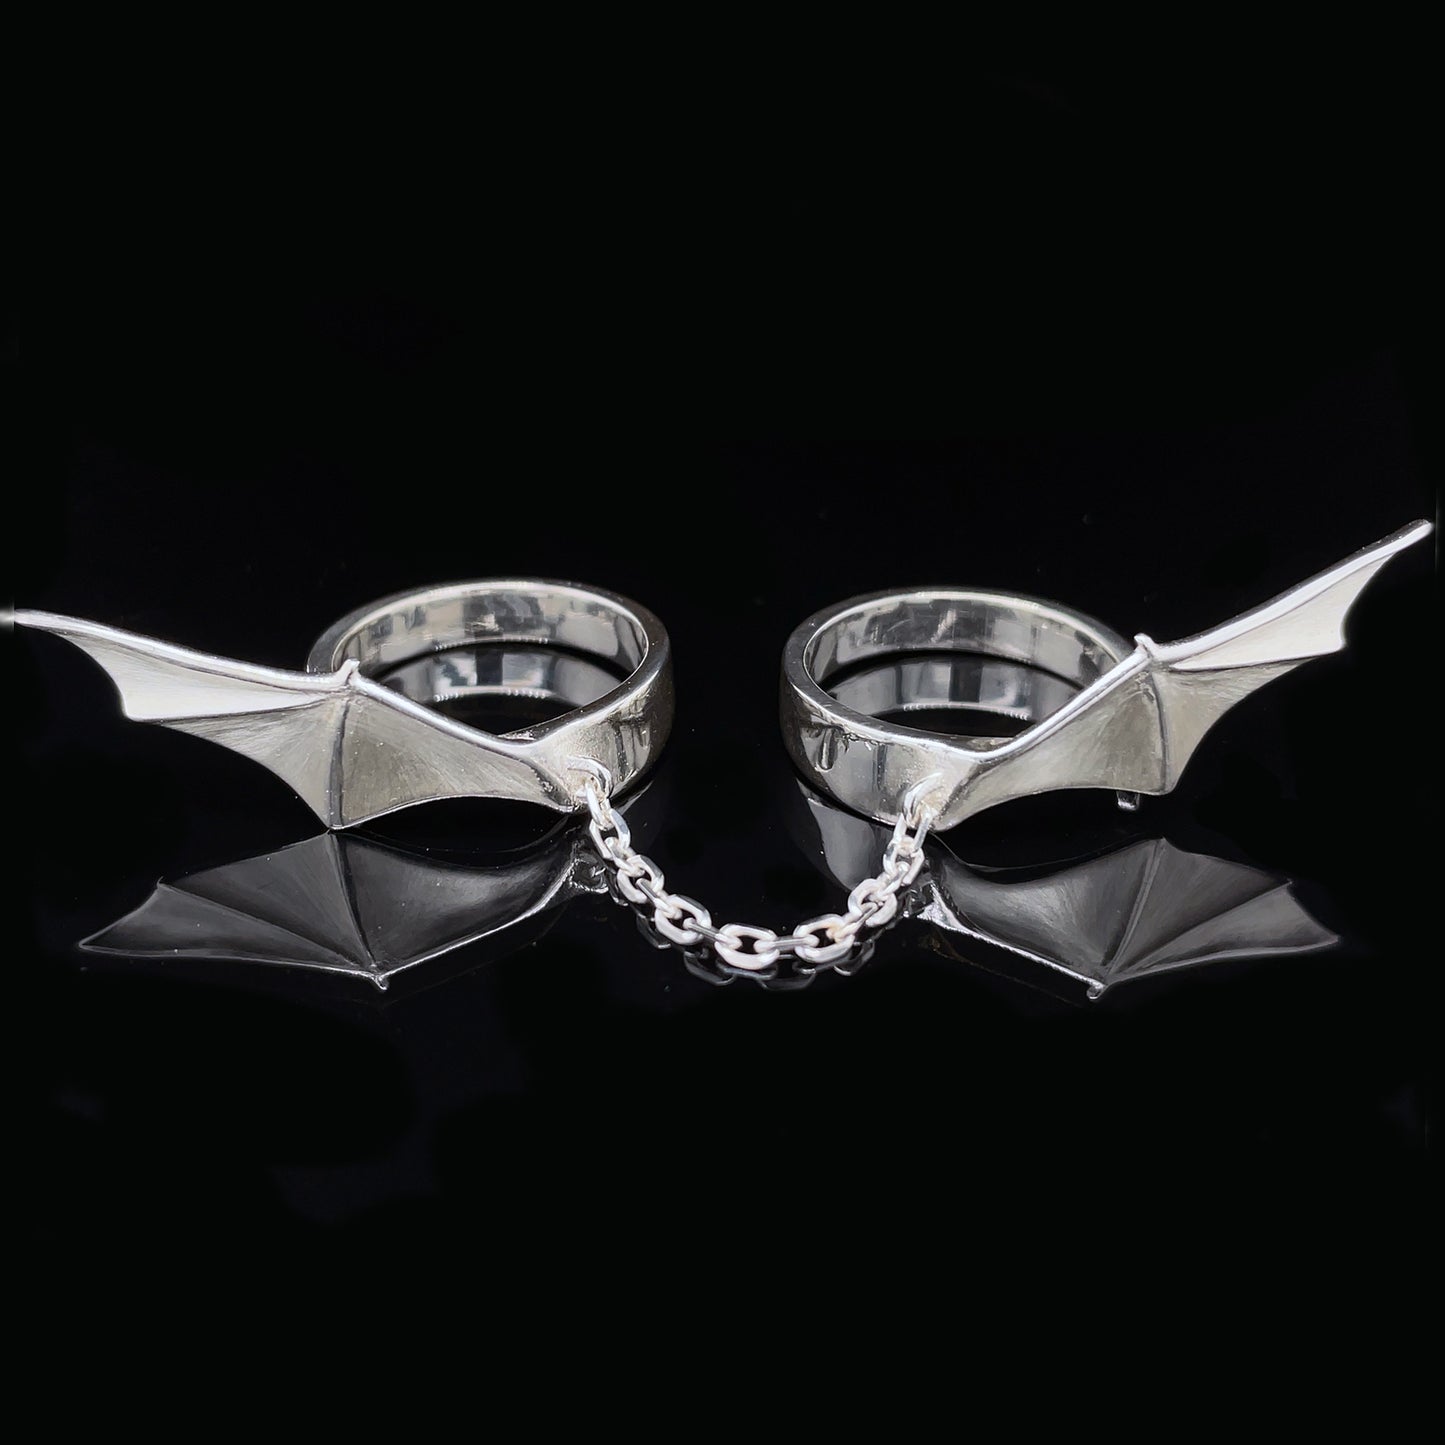 Connected Bat Wings Ring Pair